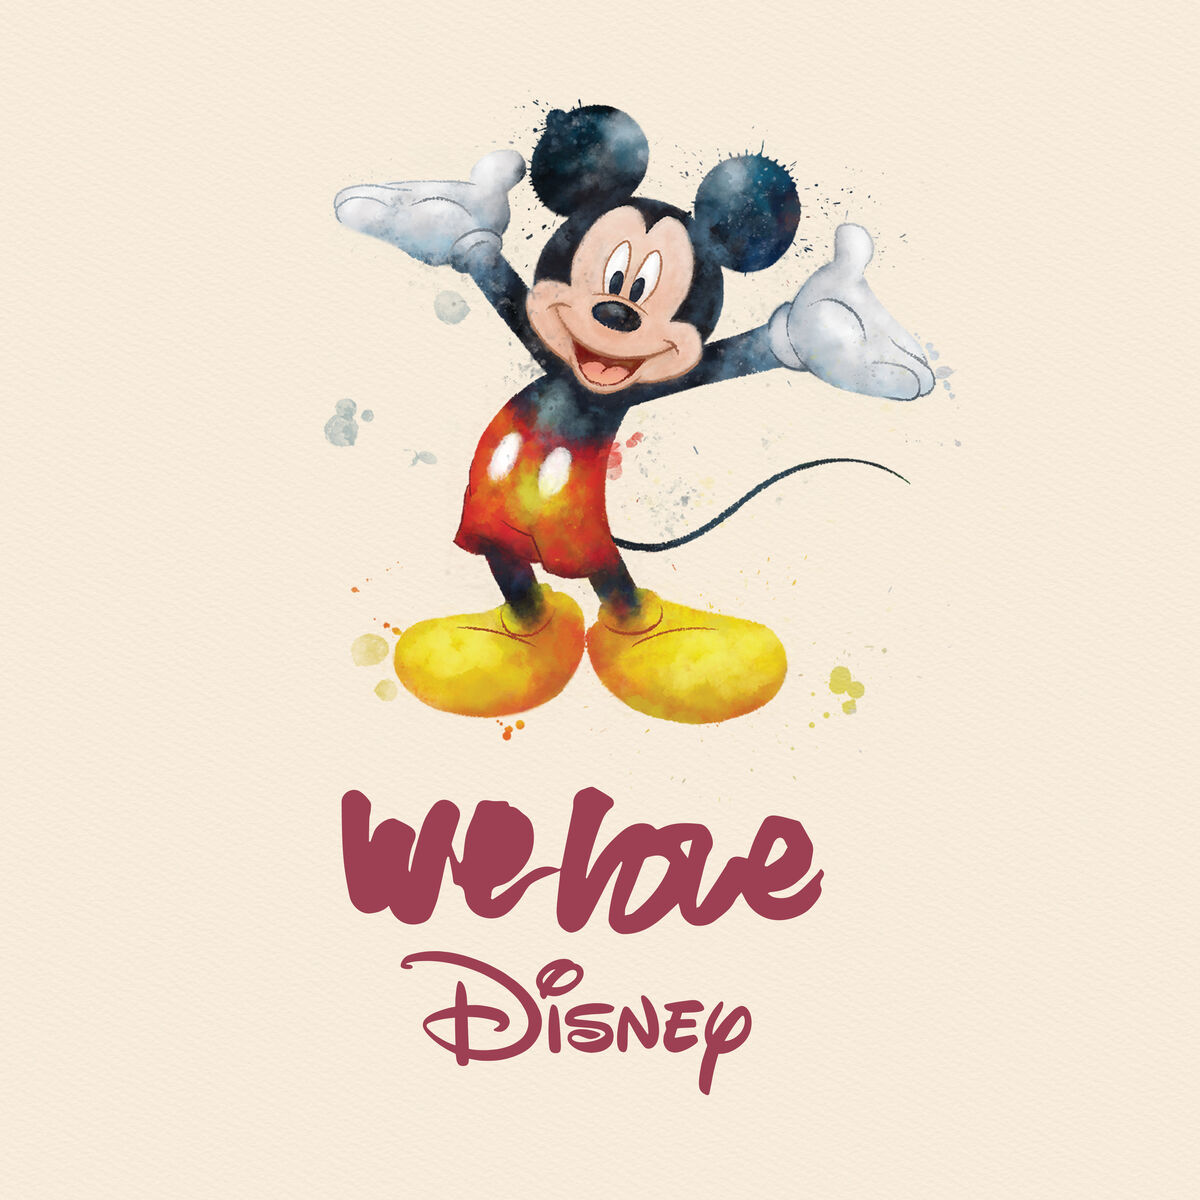 We Love Disney (2015 album) - Wikipedia